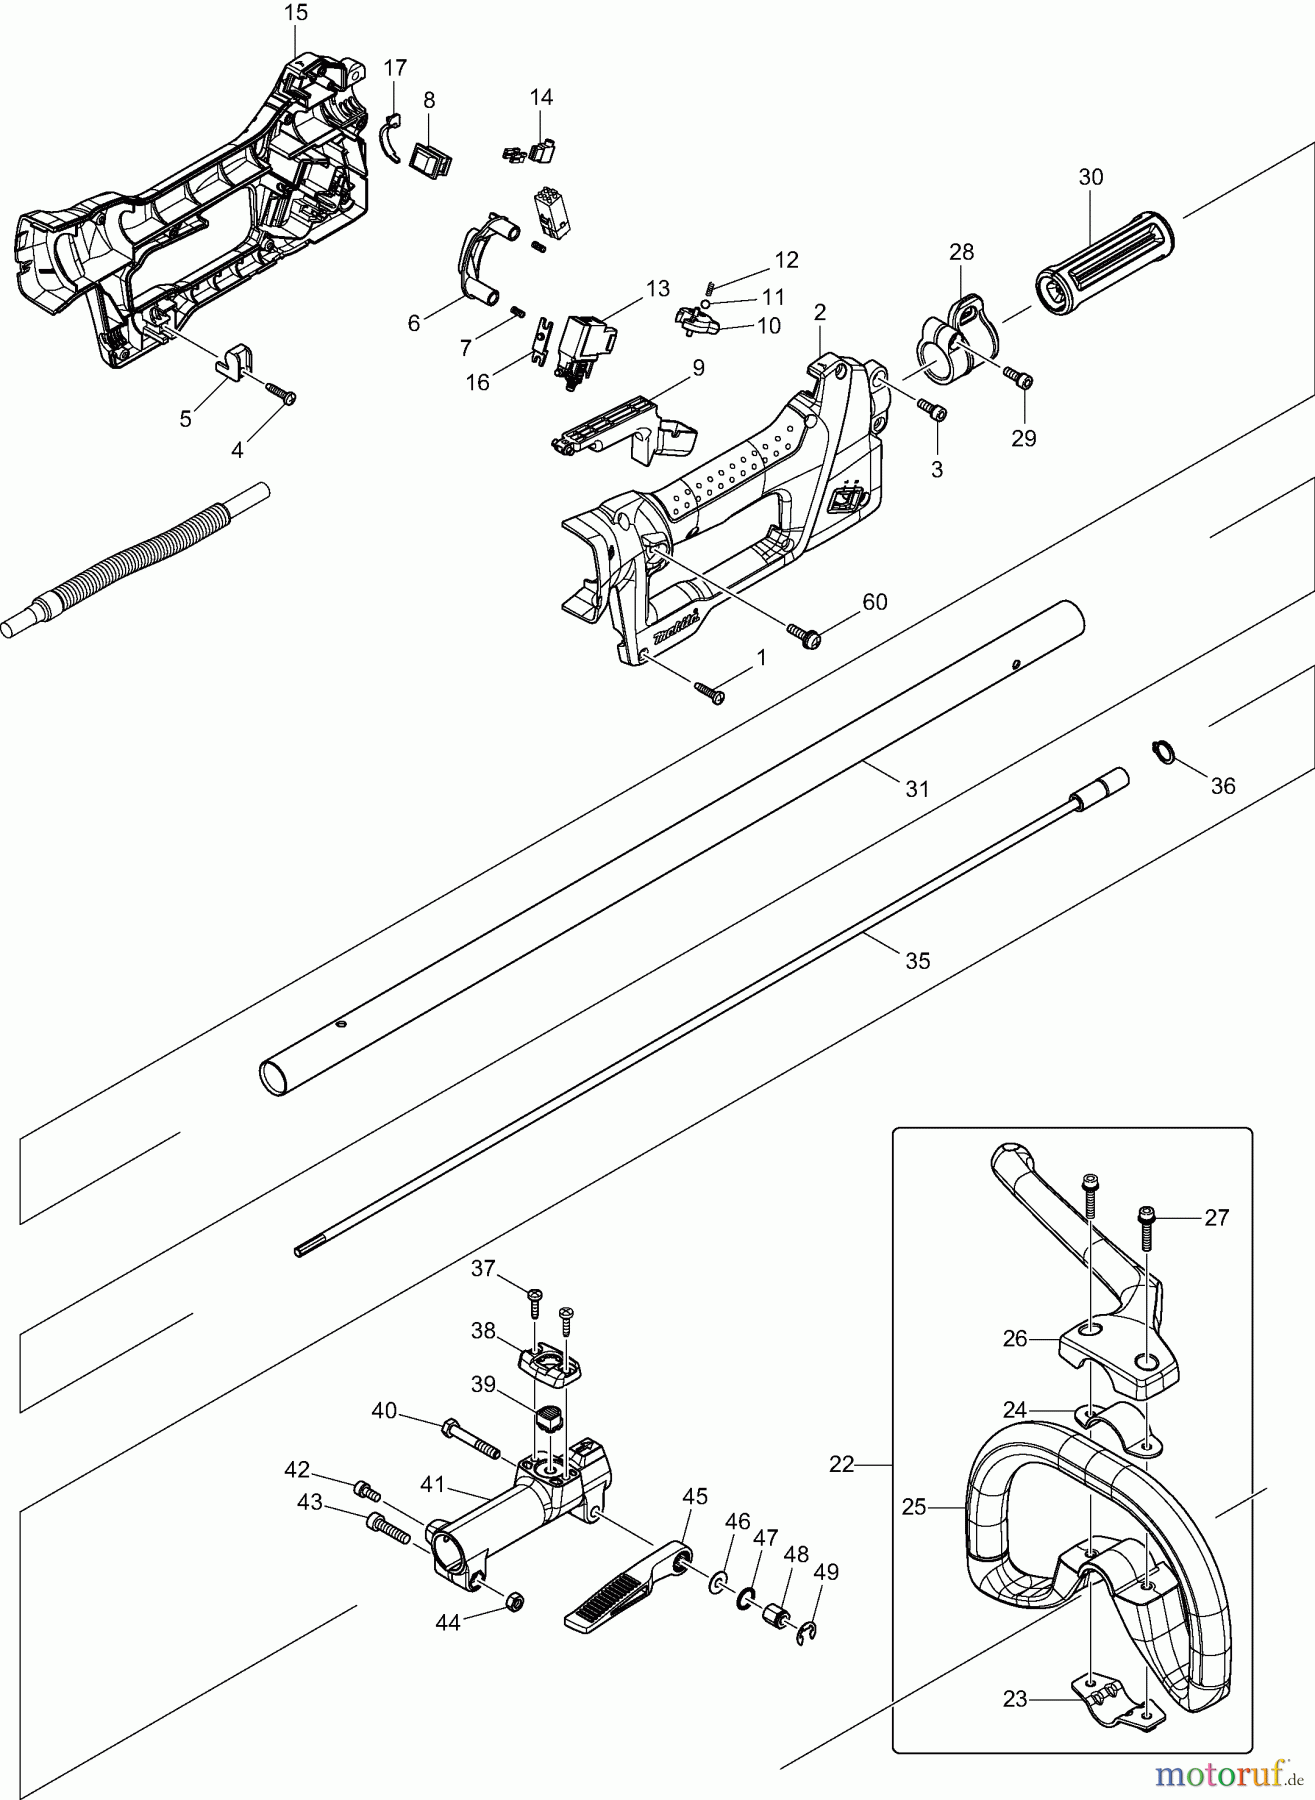  Dolmar Kombisysteme AC3610 1  Gasgriff, Handgriff